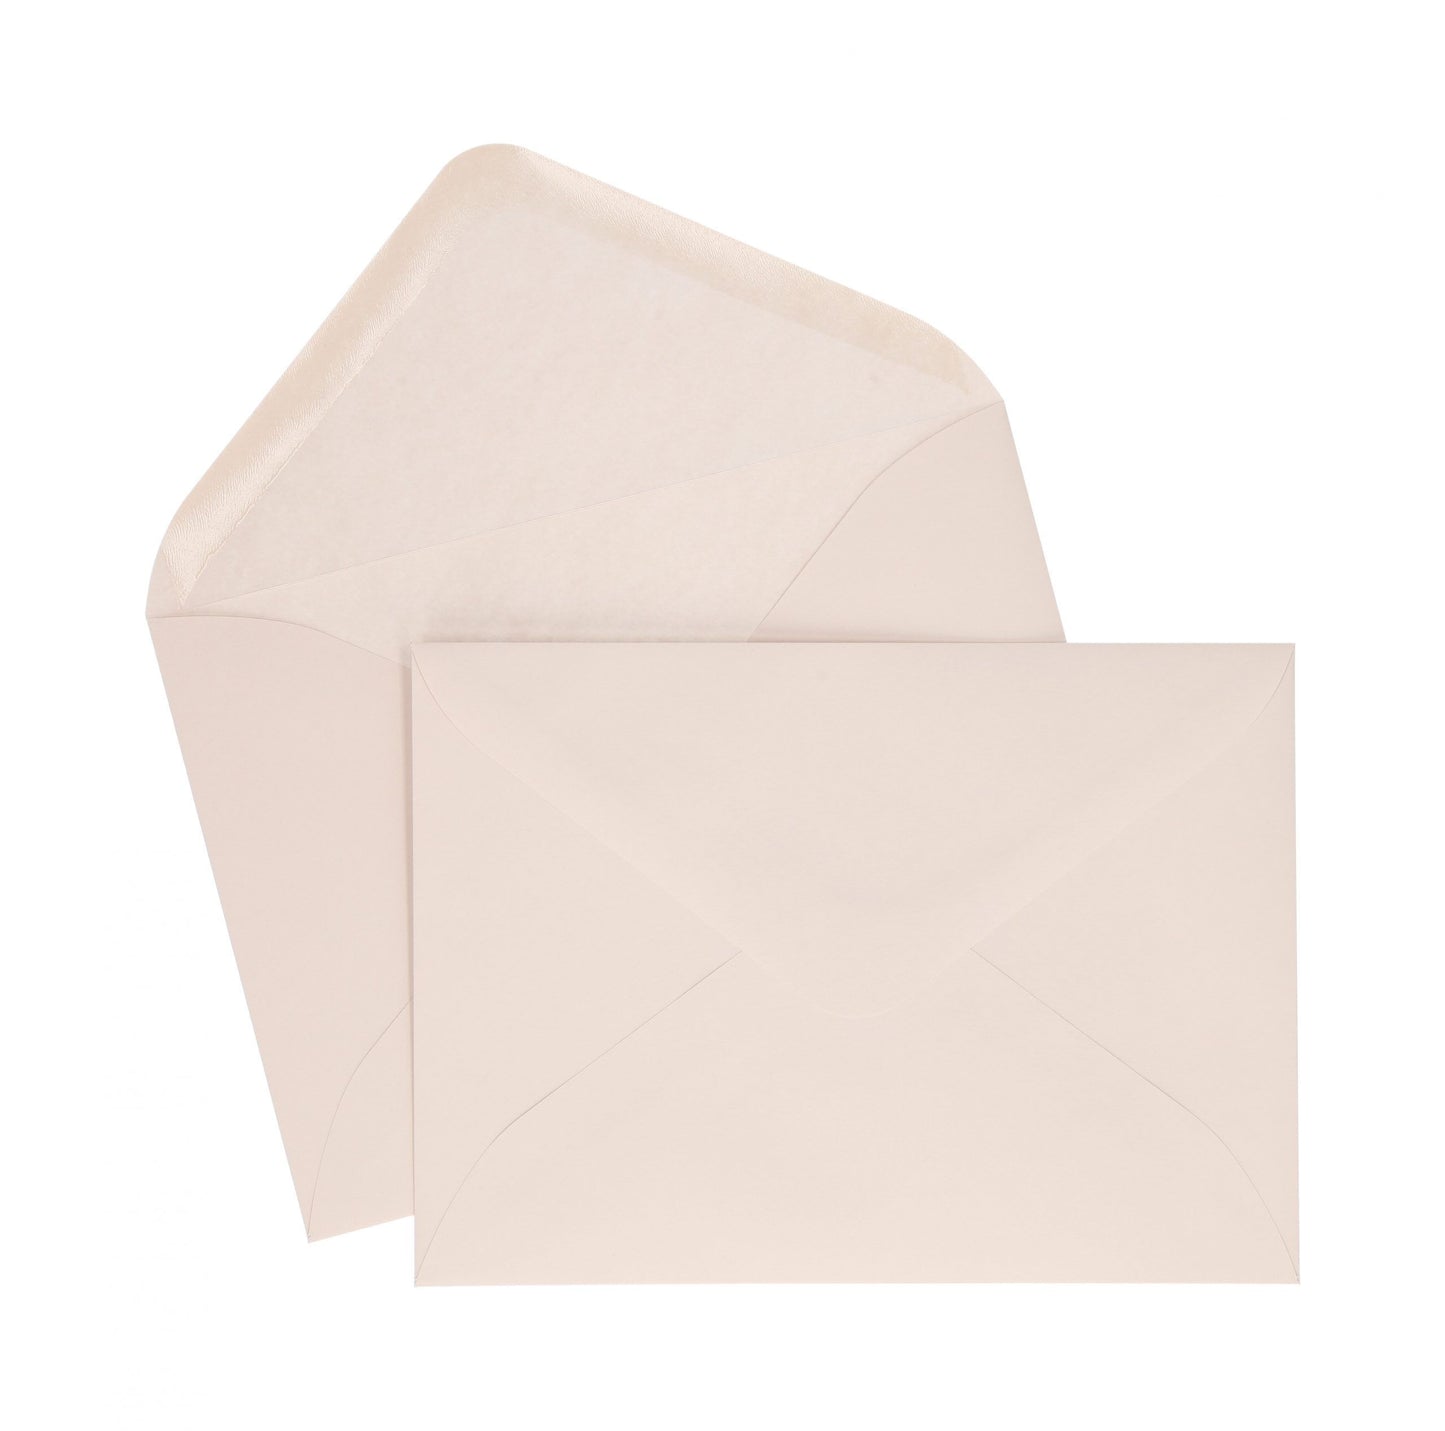 Envelope C5 Sand Beige - 10 units